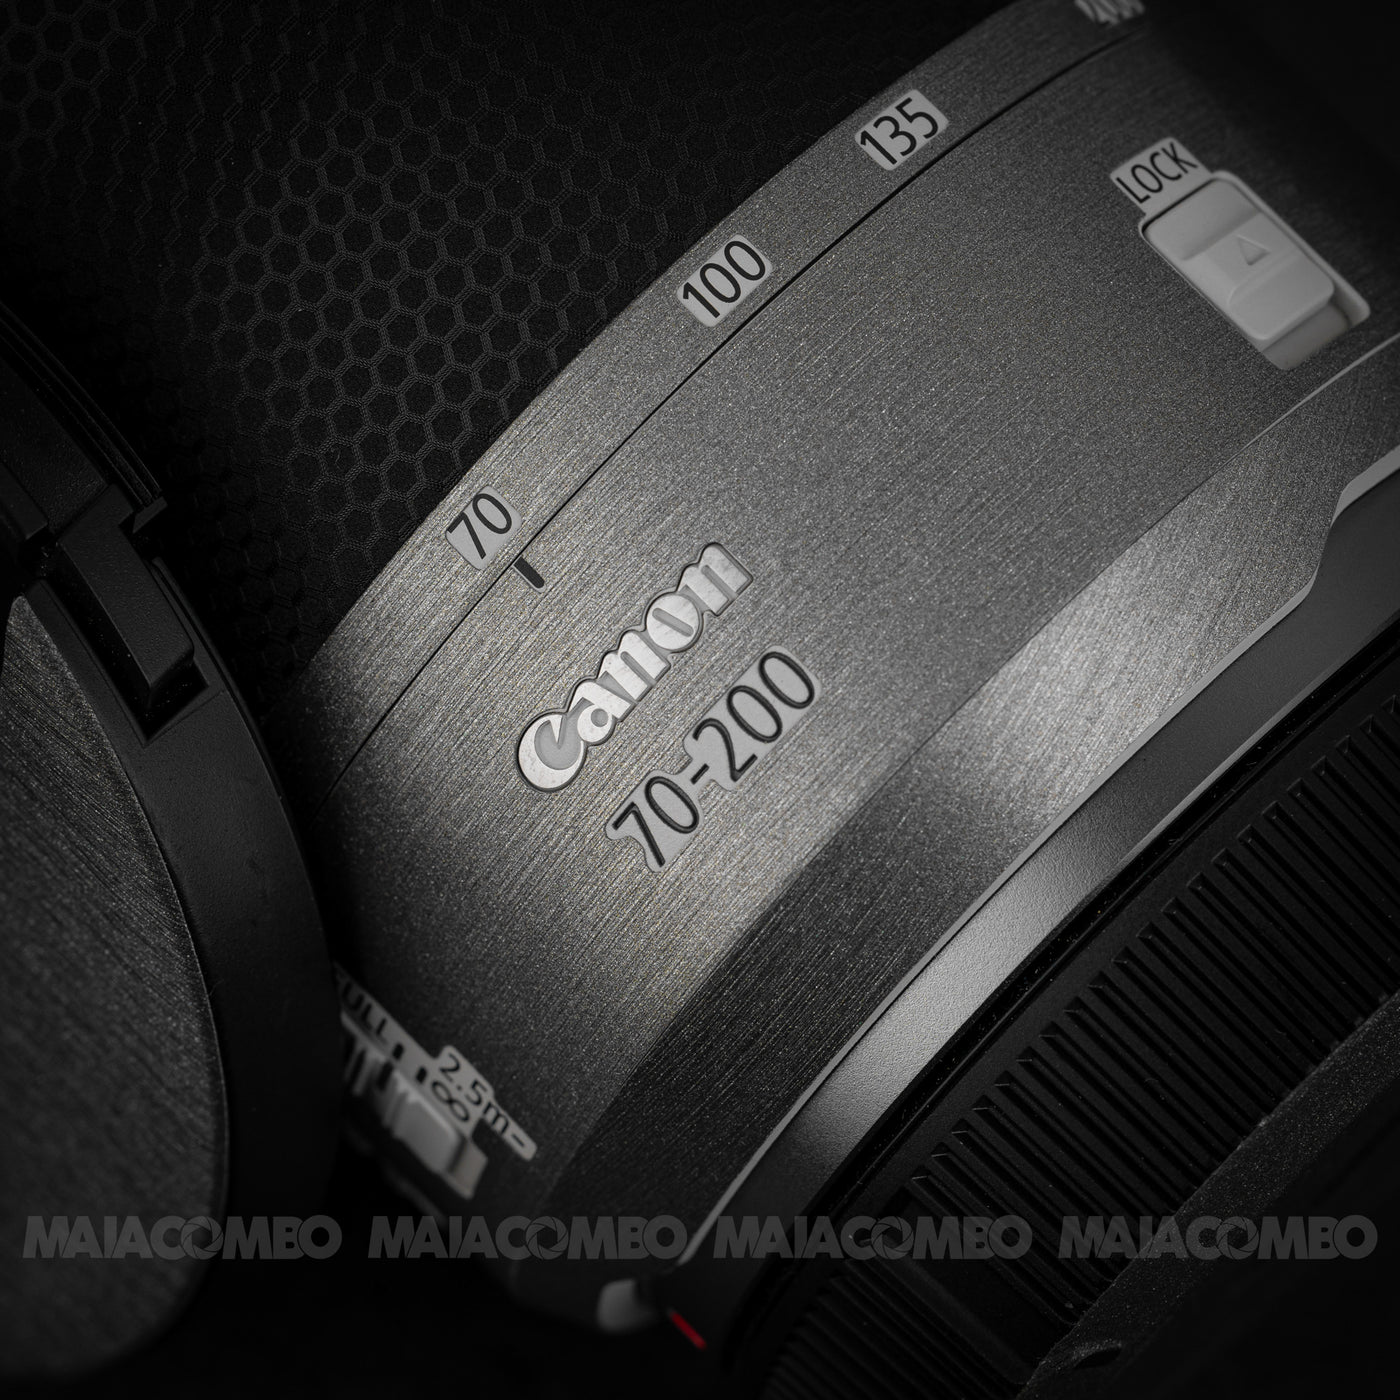 Canon RF 70-200mm F4L IS USM Lens Skin